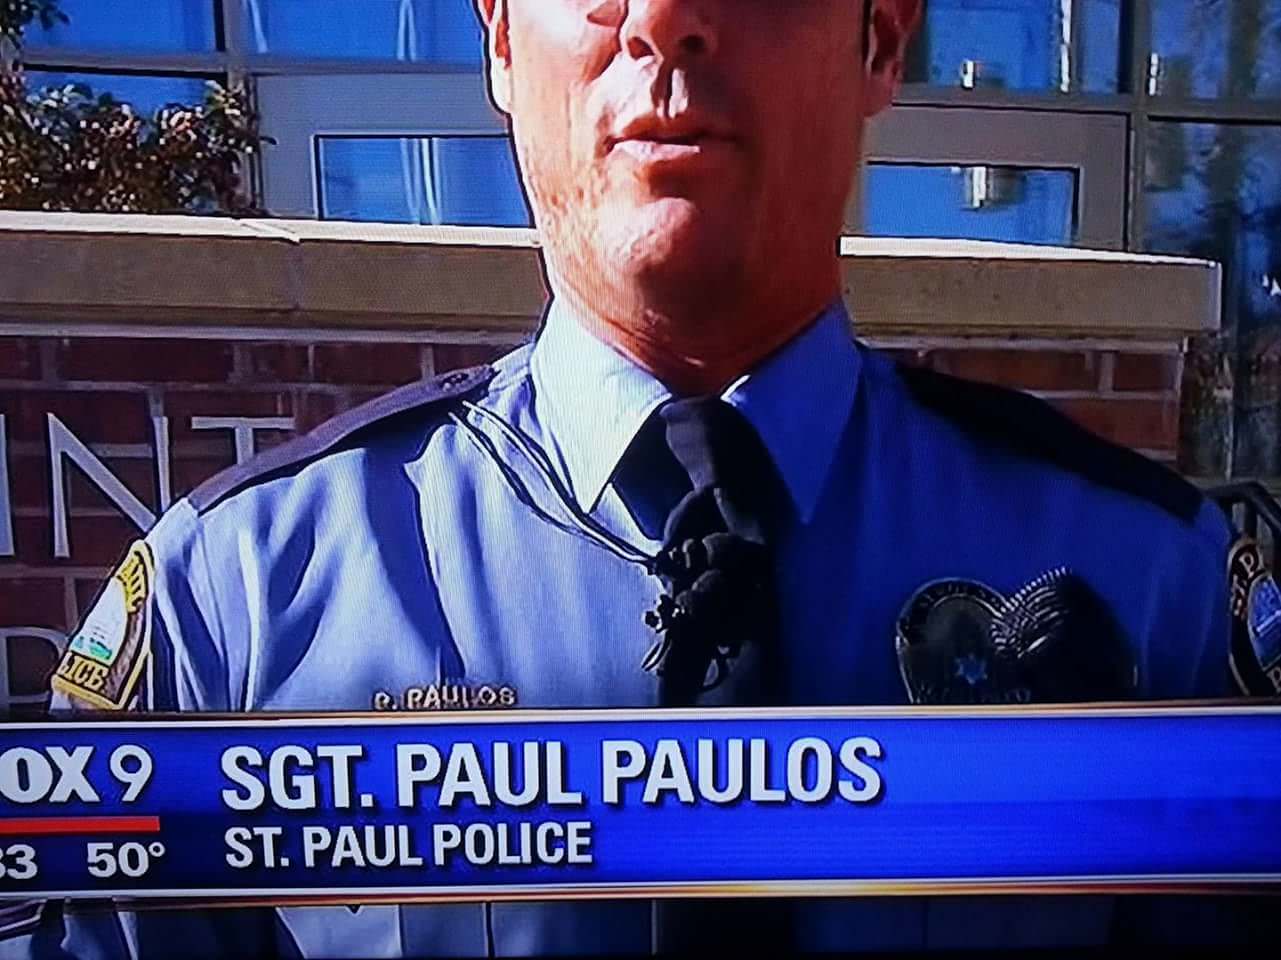 born for this job - Q.PAULO8 OX9 Sgt. Paul Paulos 3 50 St. Paul Police